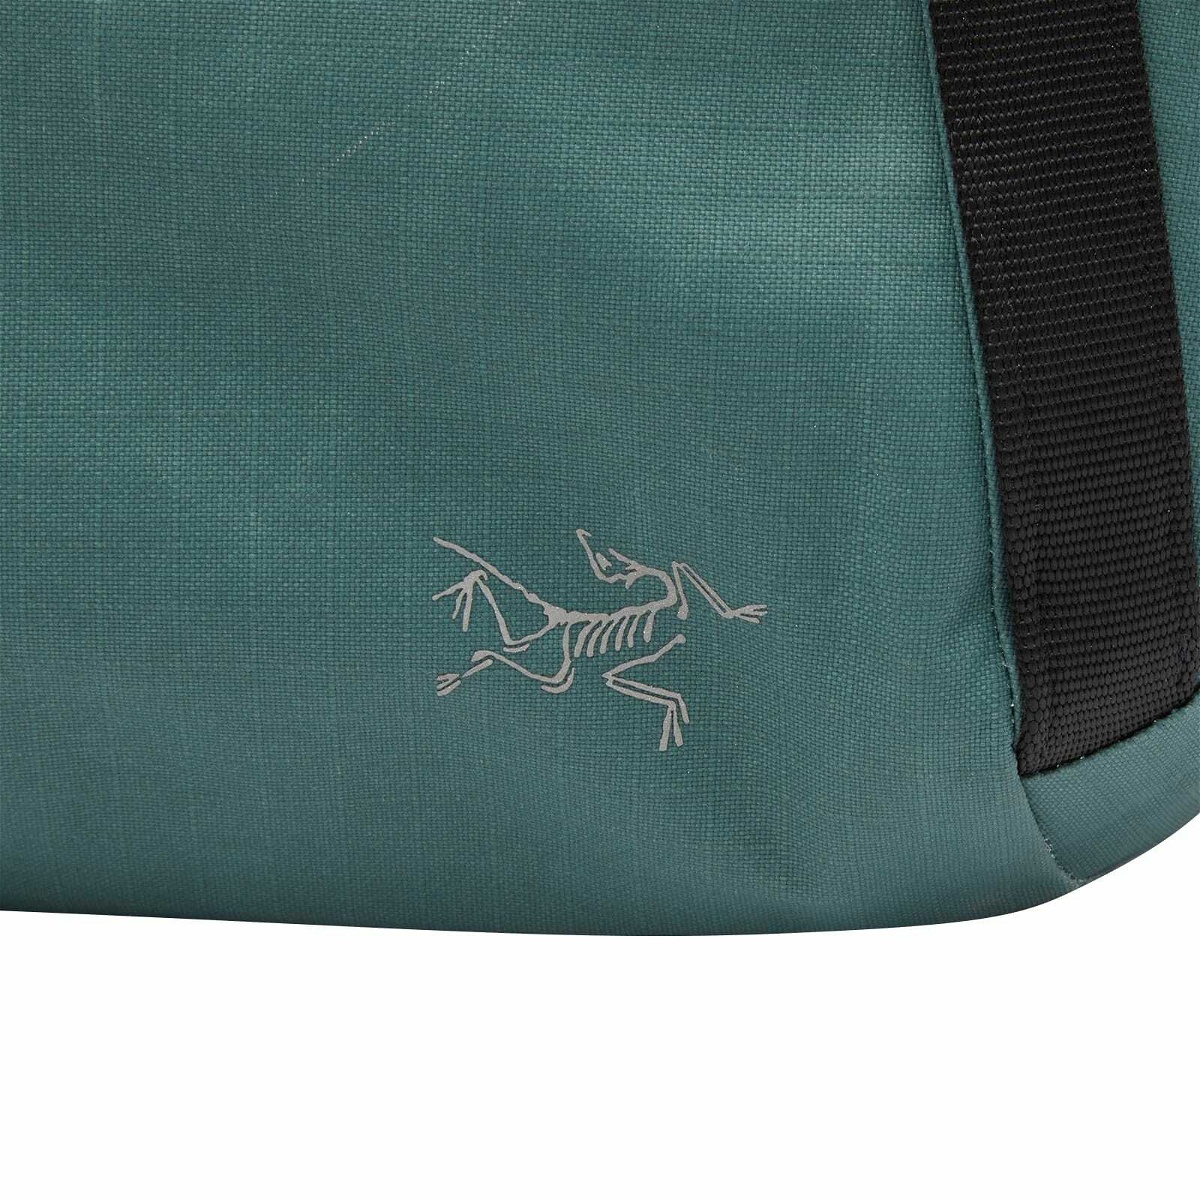 Arc'teryx Granville Shoulder Bag in Boxcar